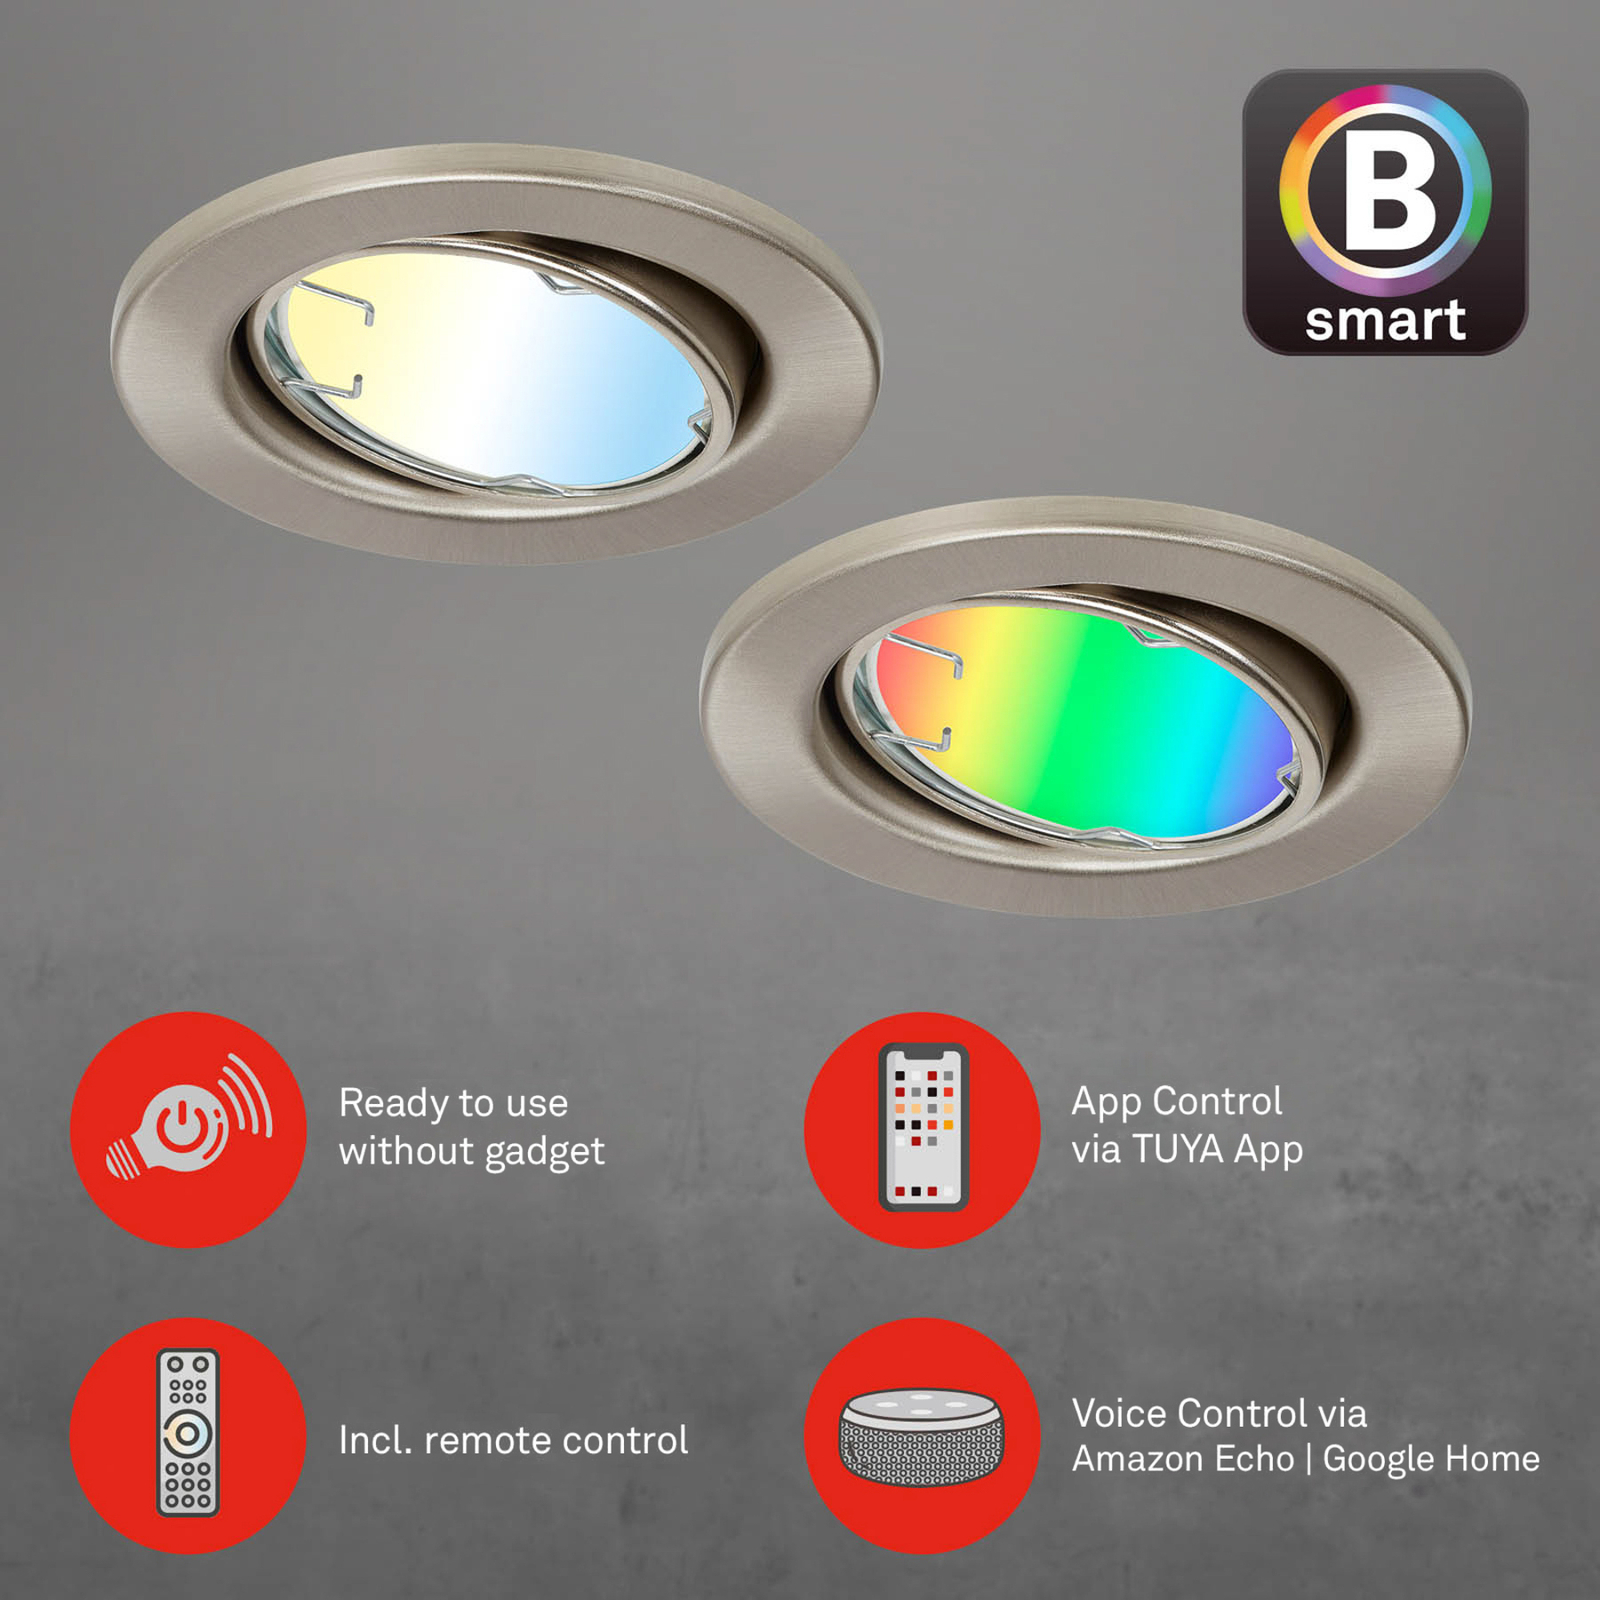 Luminaire encastrable LED Fit Move S, CCT RVB 3er, nickel